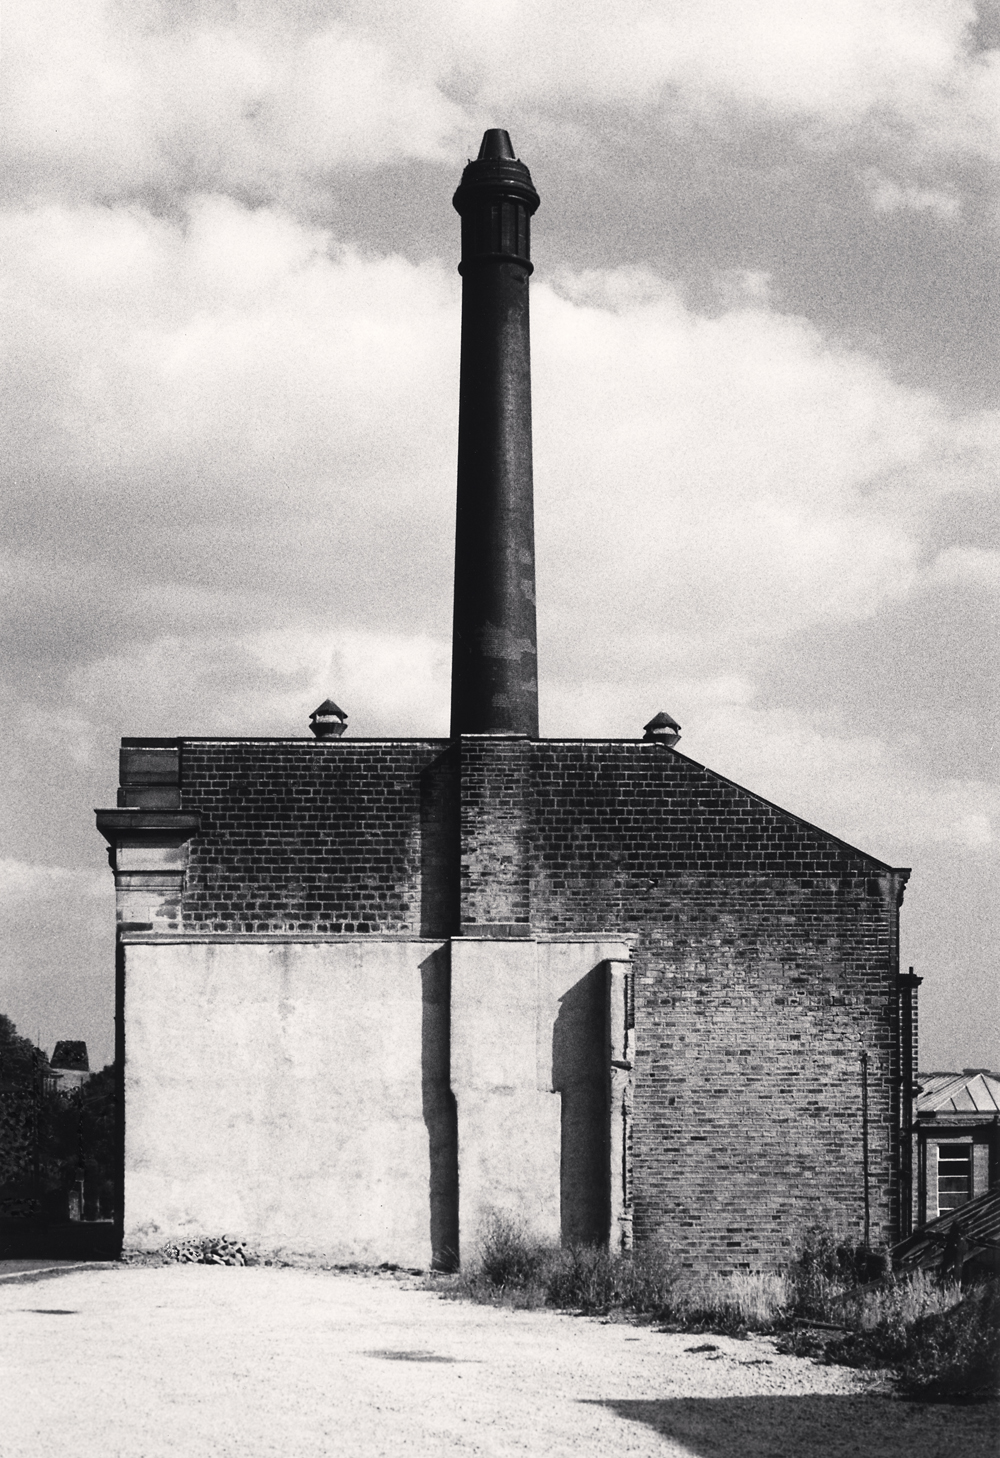 Michael Kenna, Chimney and Building, Huddersfield, Yorkshire, England, 1984